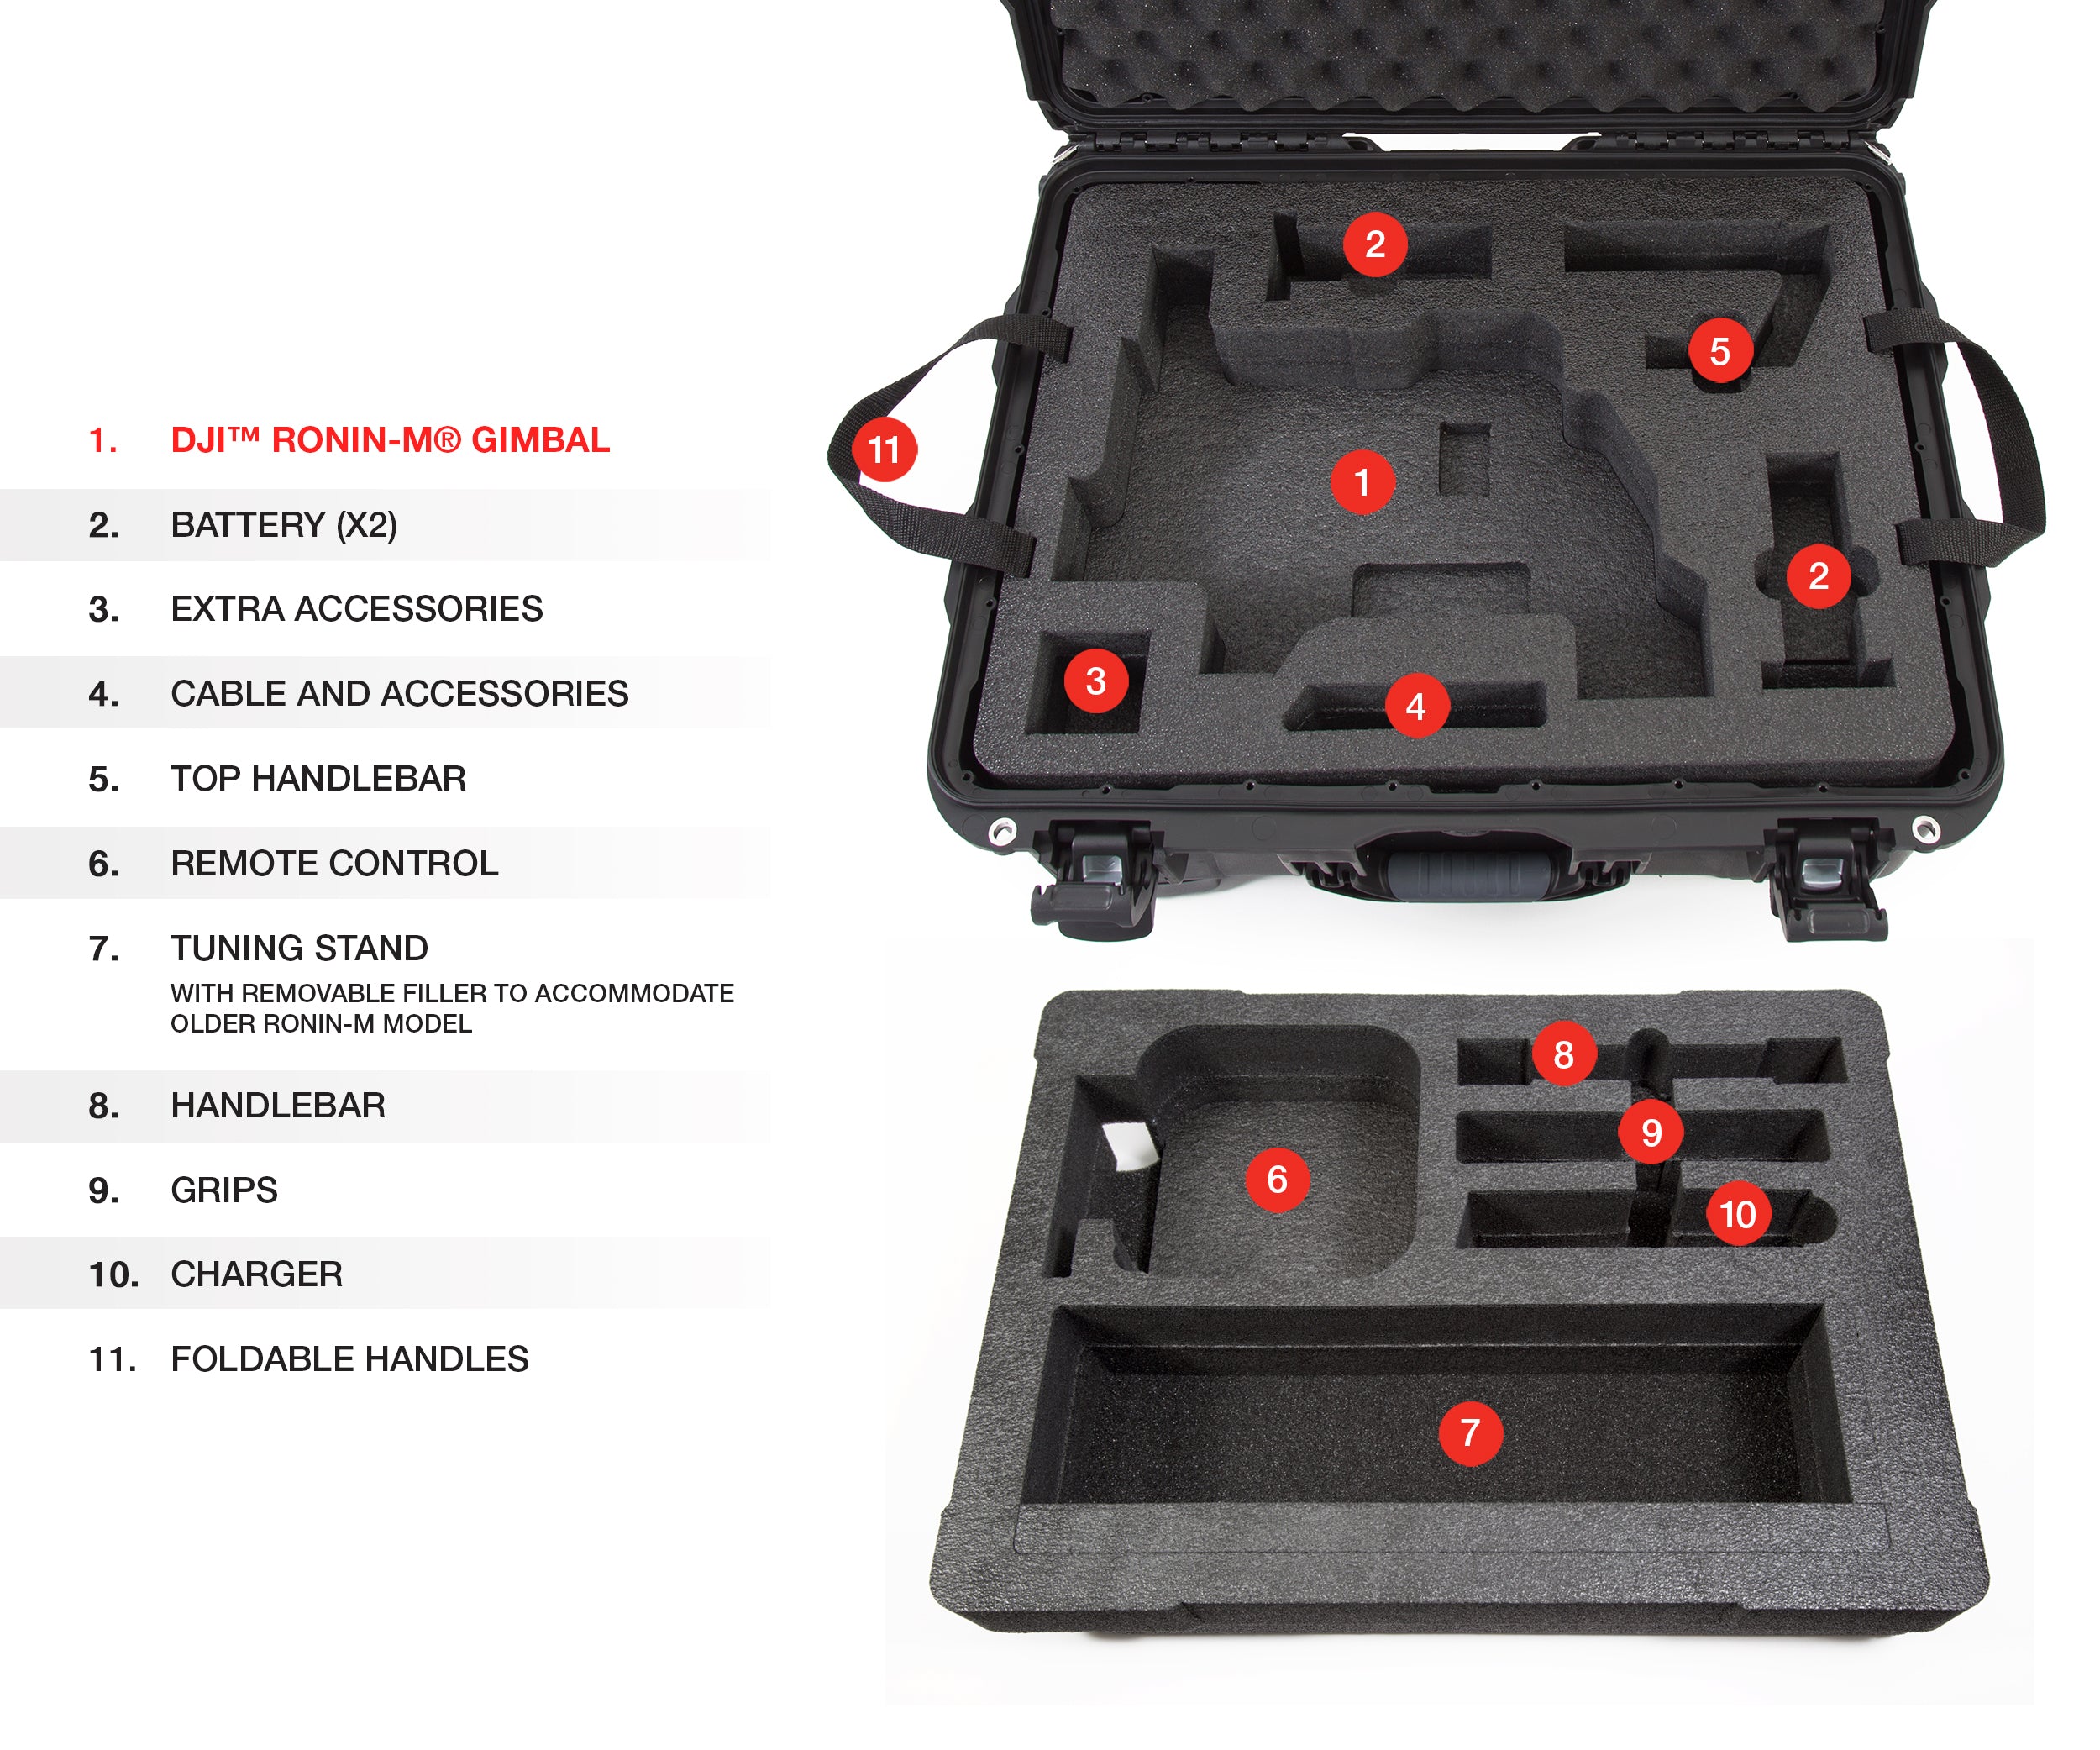 Nanuk Ronin M Waterproof Hard Case with Wheels and Custom Foam Insert for DJI Ronin M Gimbal Stabilizer Systems - Black